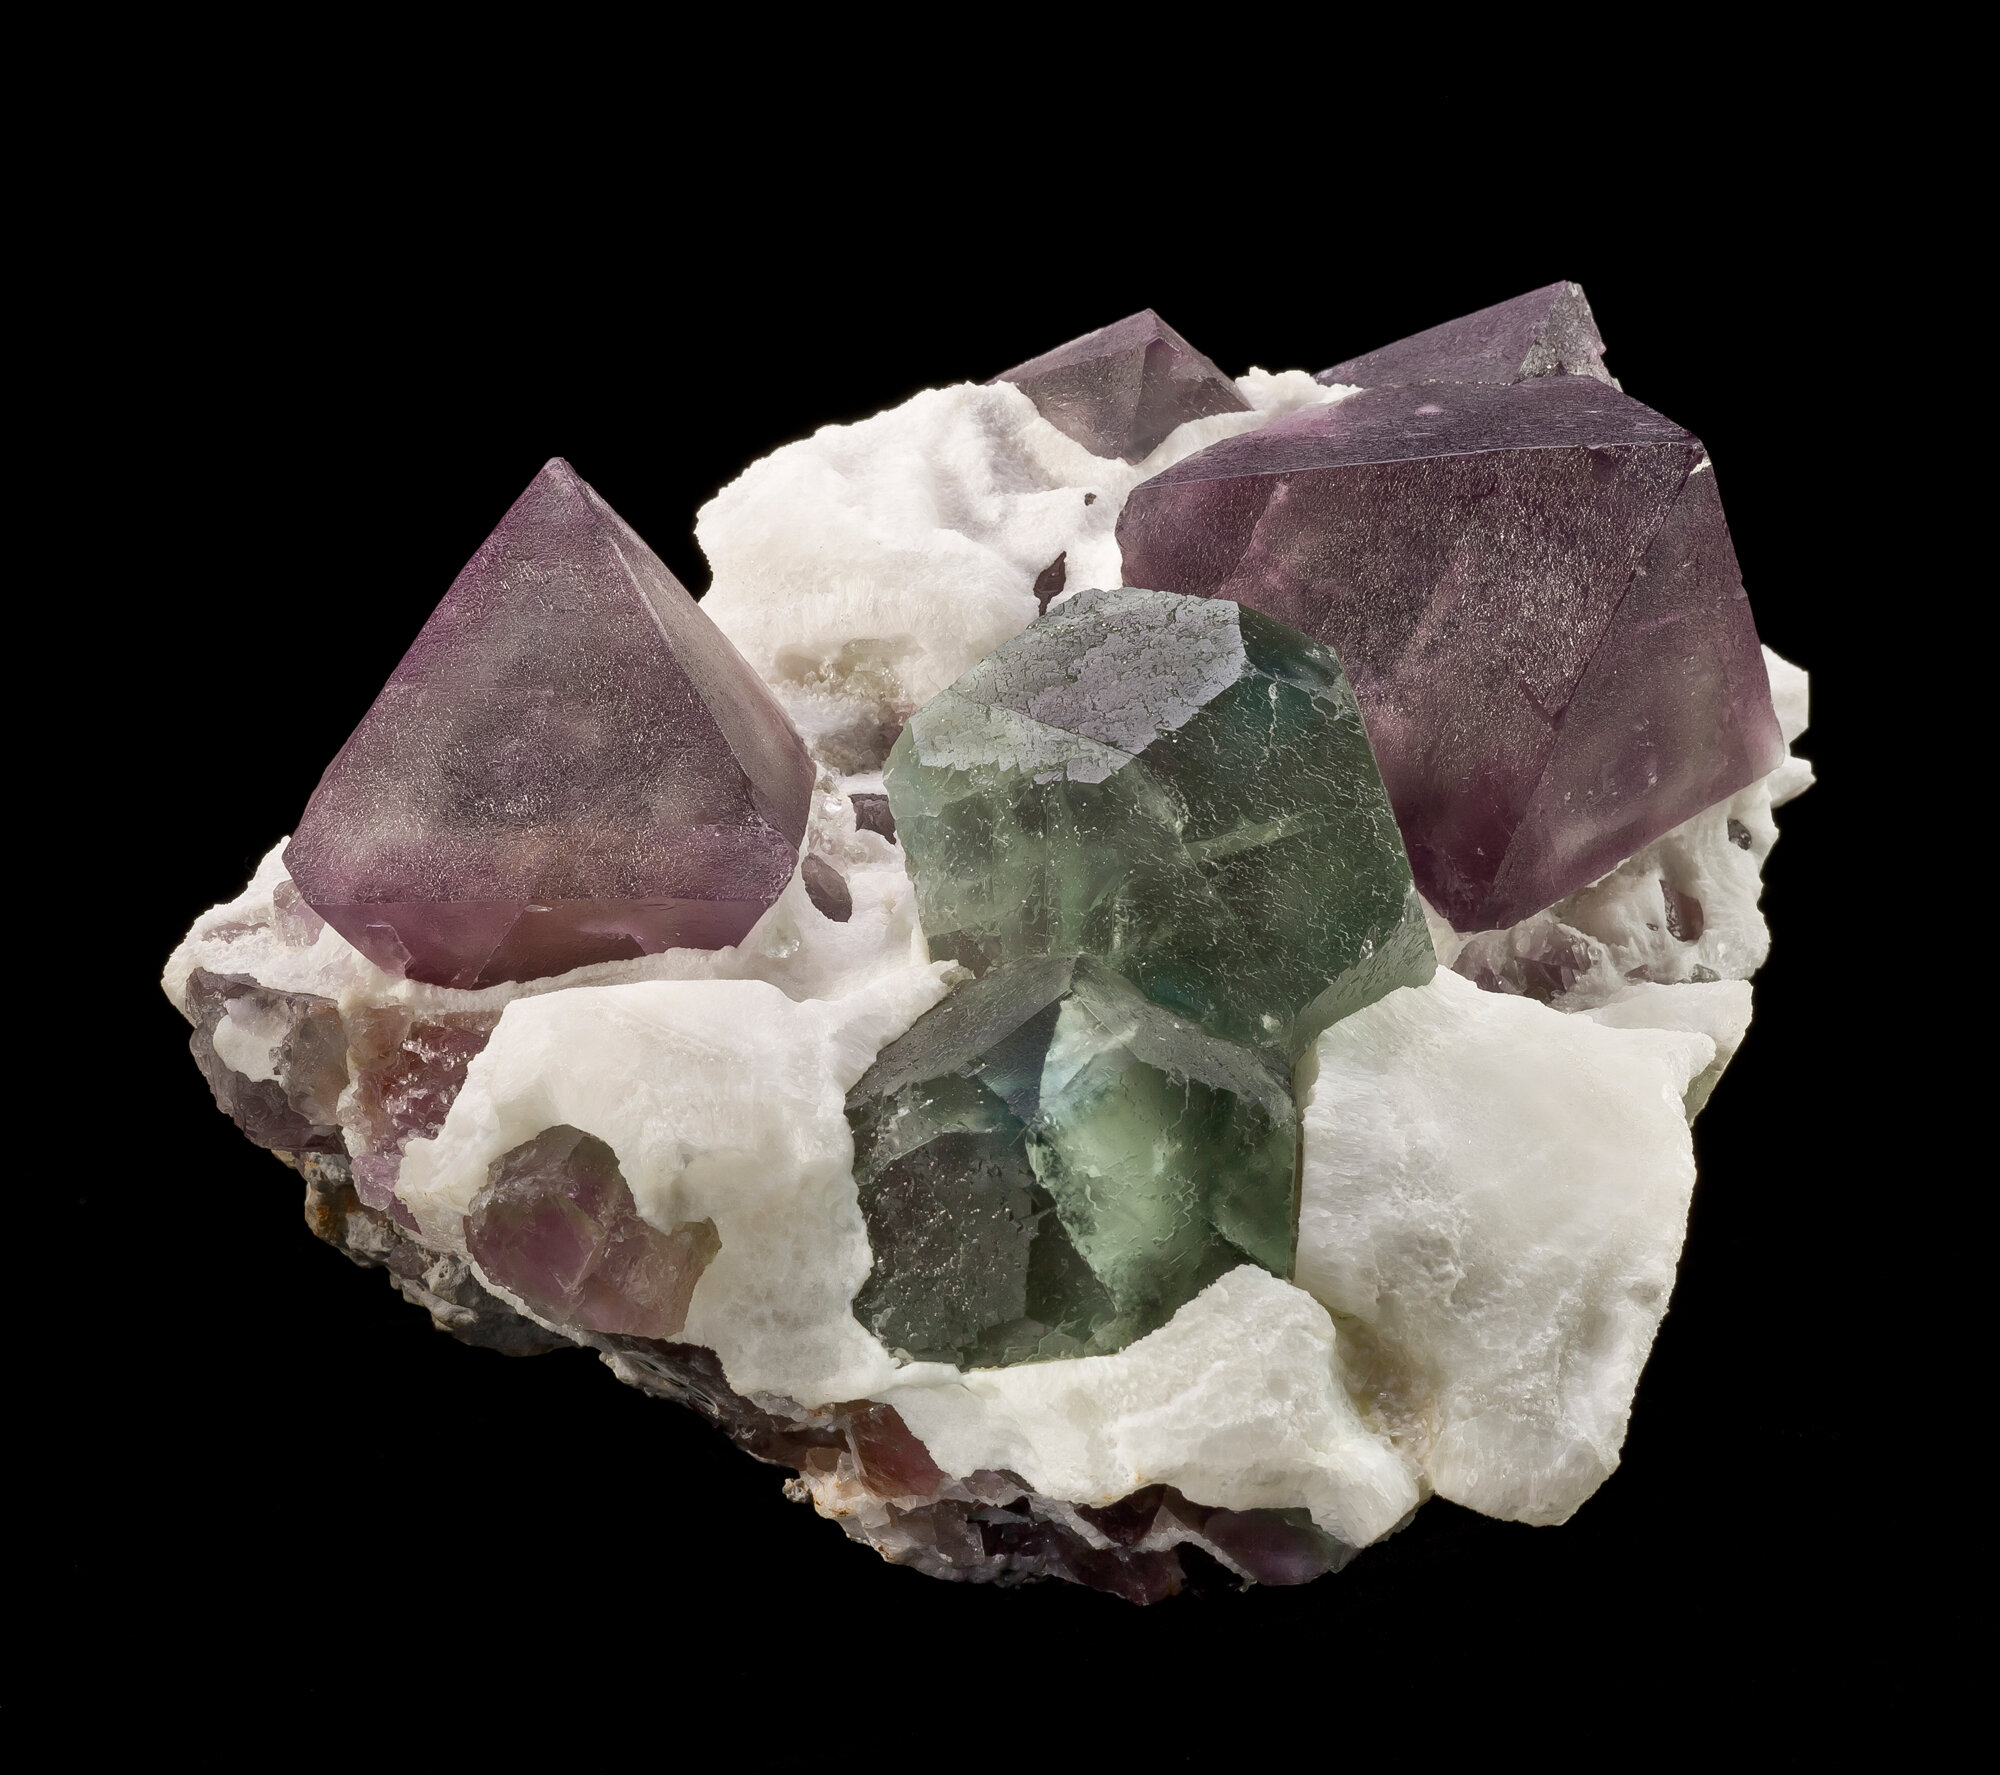  Fluorite (two habits), 17.5 cm across, from the De’an fluorite mine, Wushan, De’an County, Juijiang Prefecture, Jianxi Province, China. Ex Steve Neely collection. 